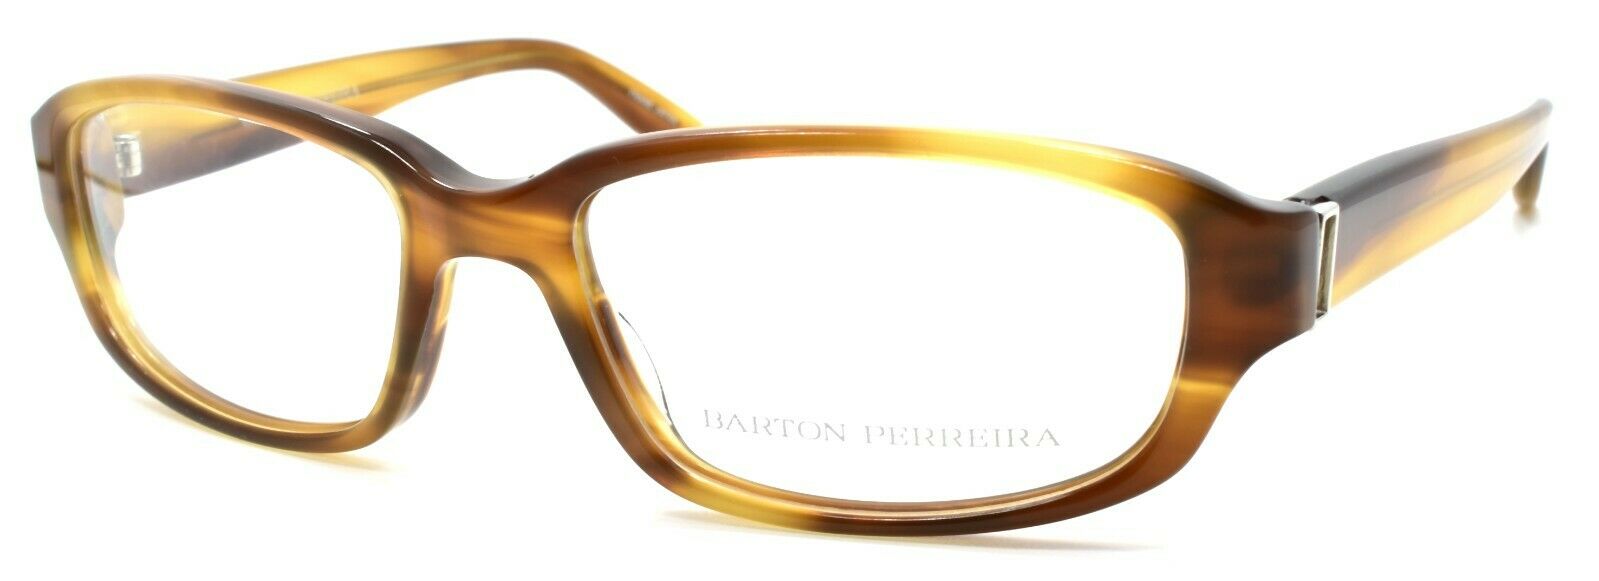 1-Barton Perreira Accomplice UMT Unisex Eyeglasses Frames 55-17-136 Umber Tortoise-672263037682-IKSpecs